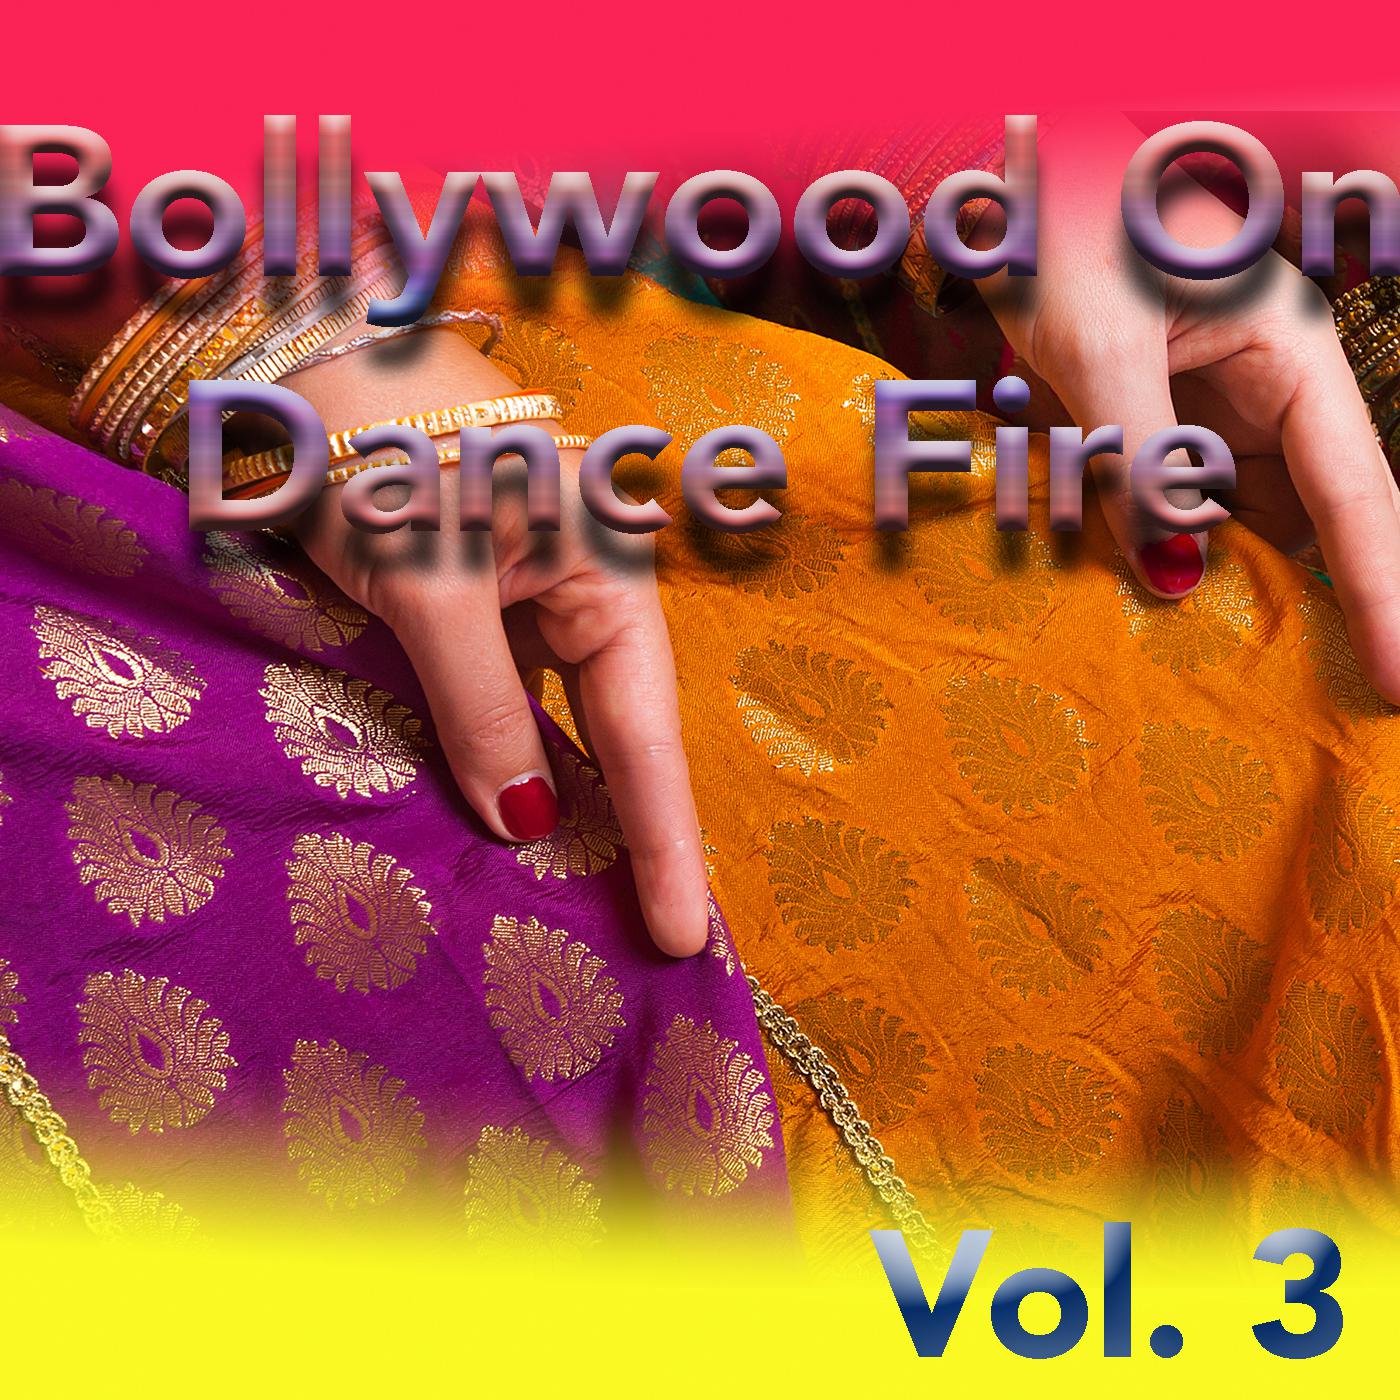 Bollywood On Dance Fire, Vol. 3